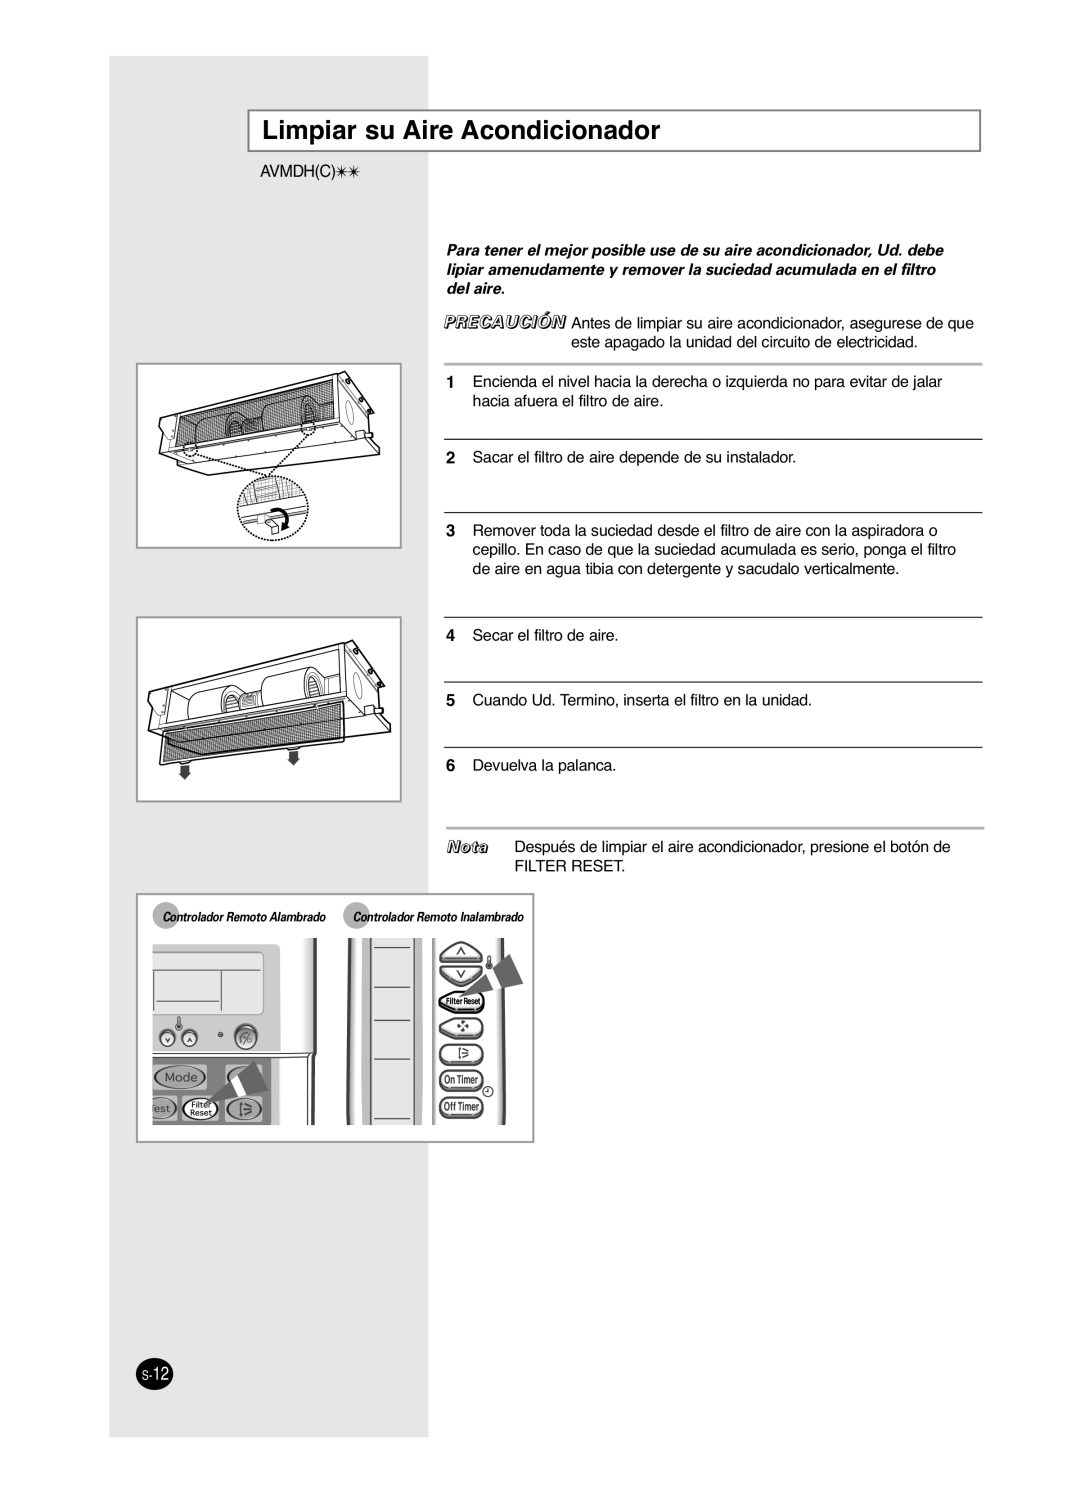 Samsung AVMHH(C) user manual Limpiar su Aire Acondicionador, Avmdhc 